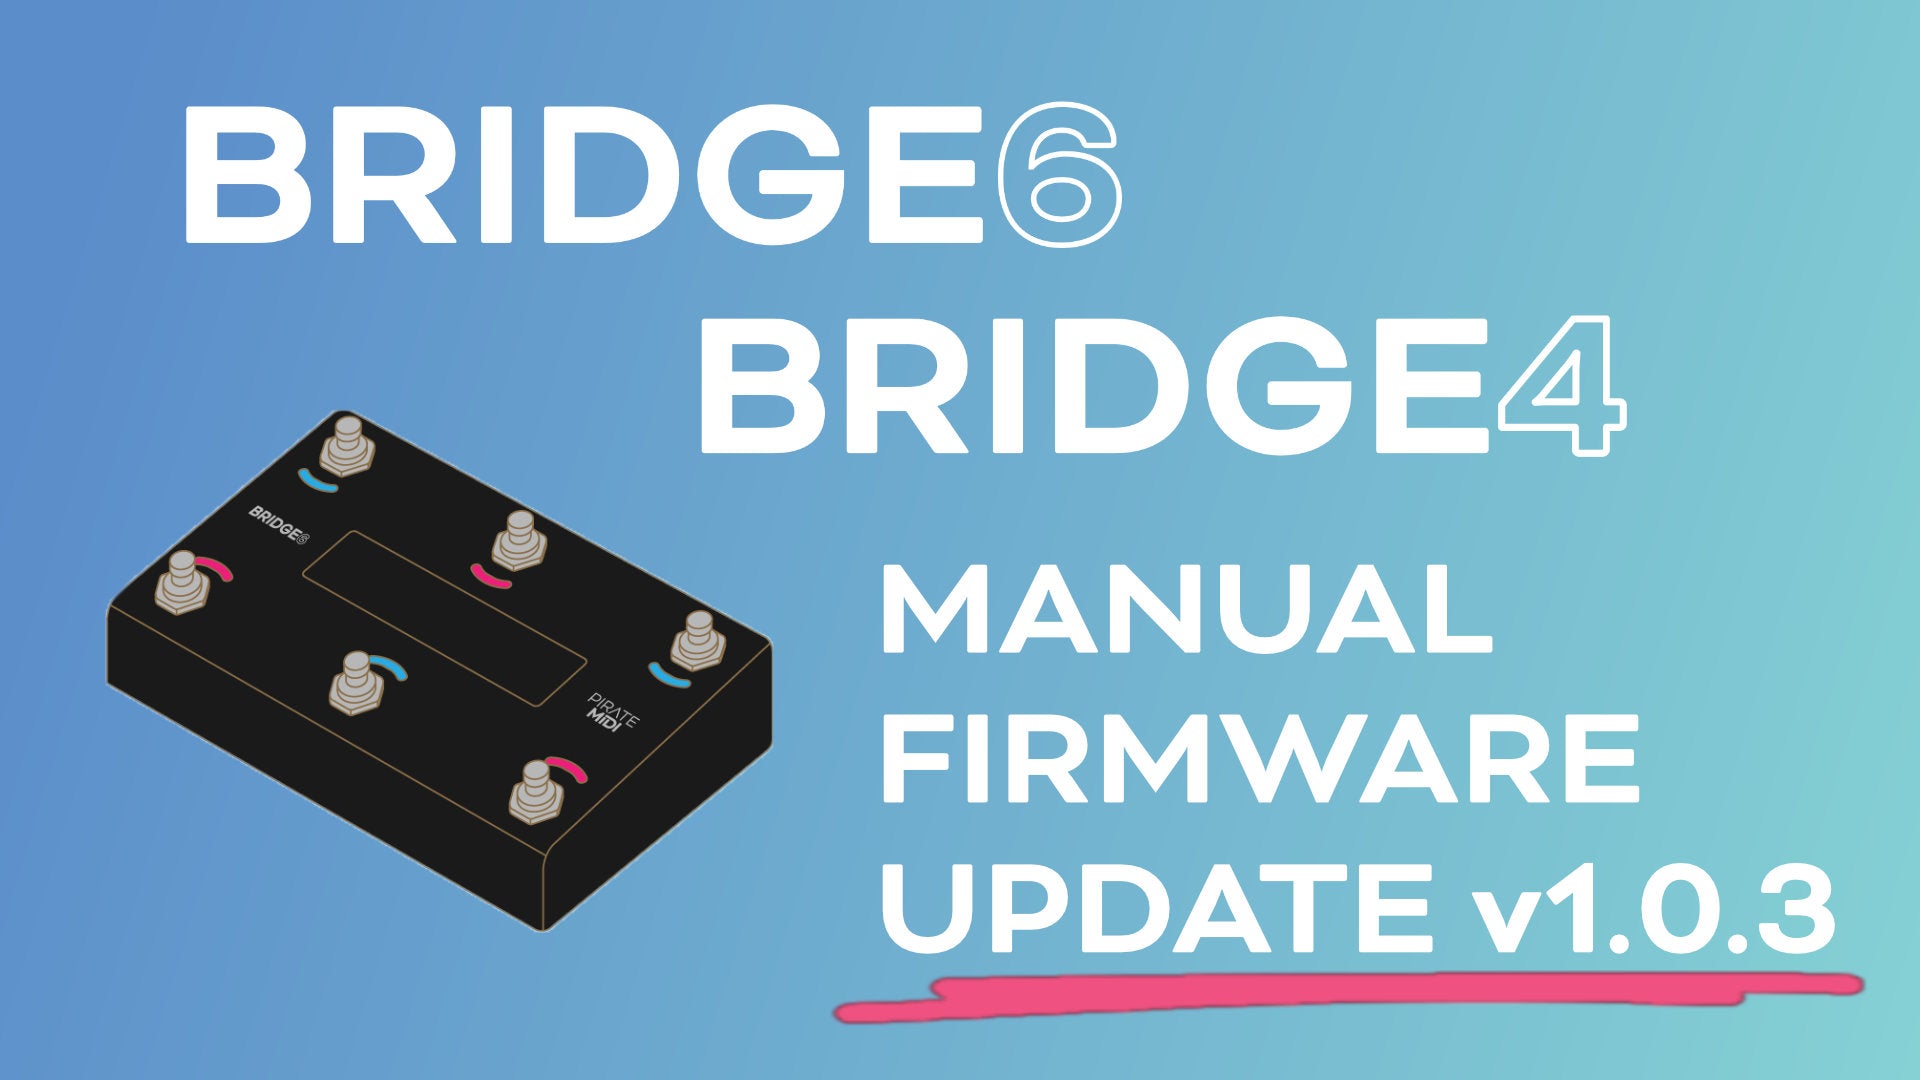 BRIDGE Firmware v1.0.3 Released